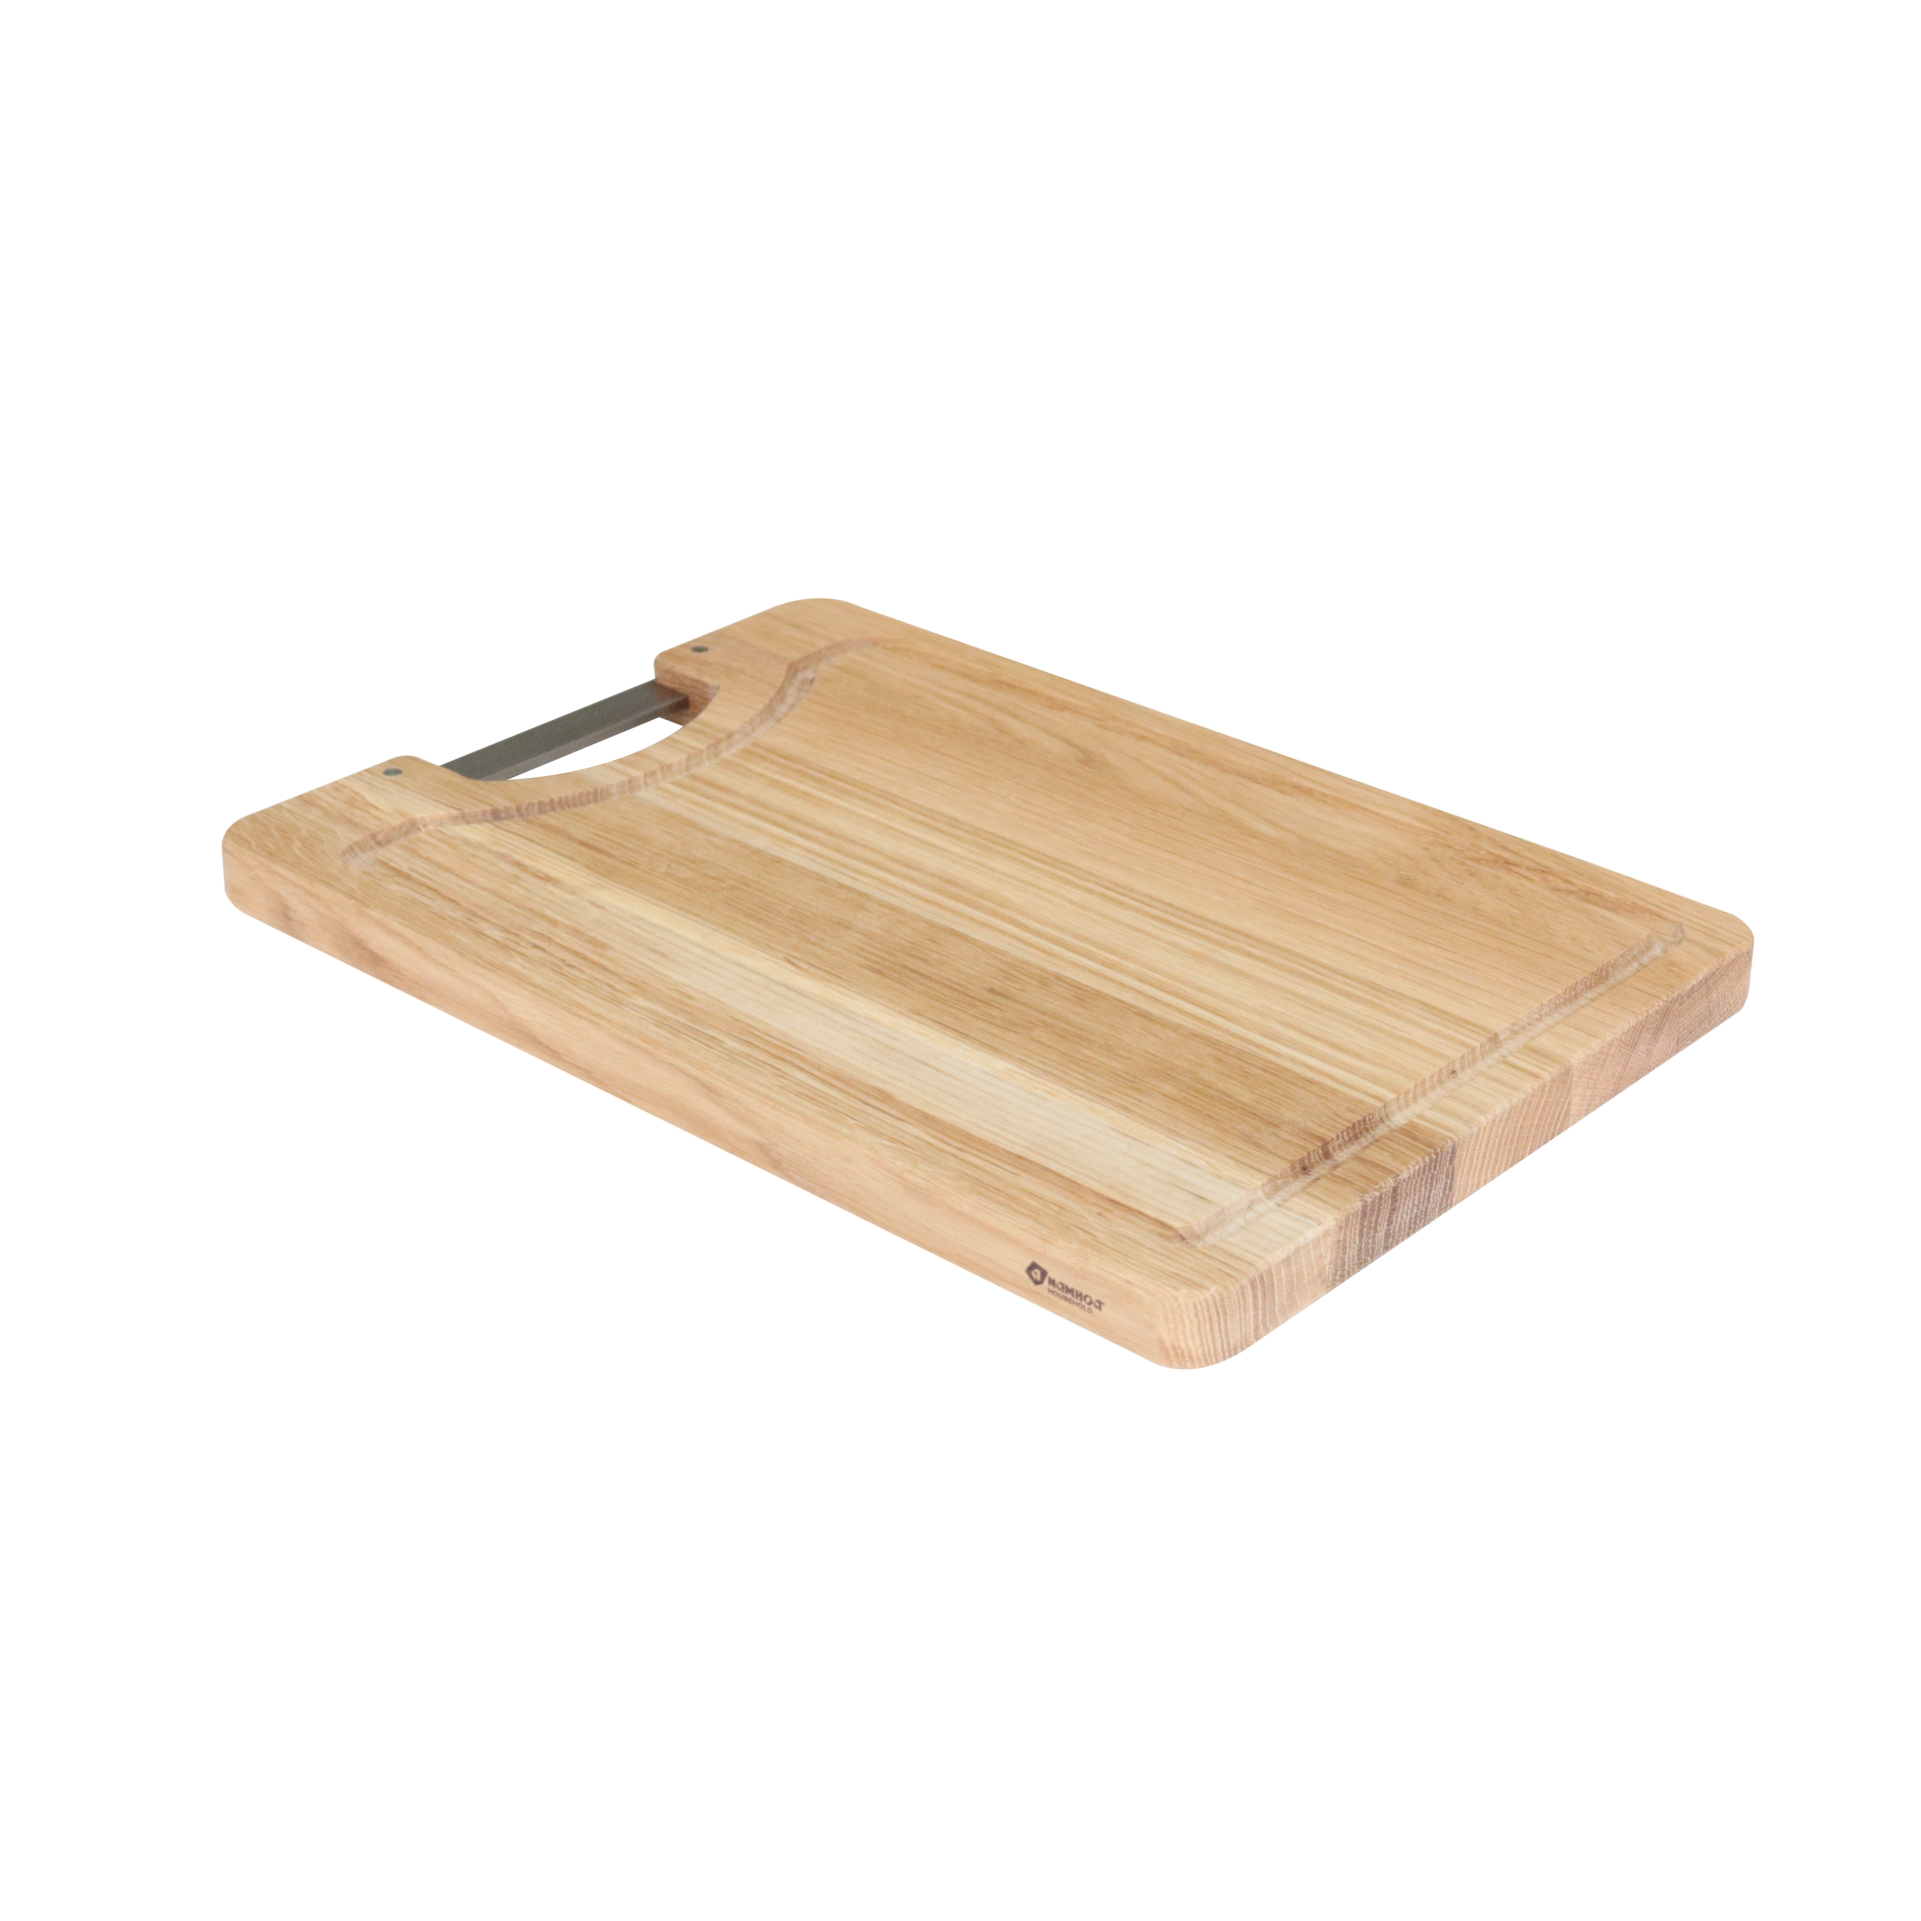 Strive rectangle White Oak Cutting board with inox handle